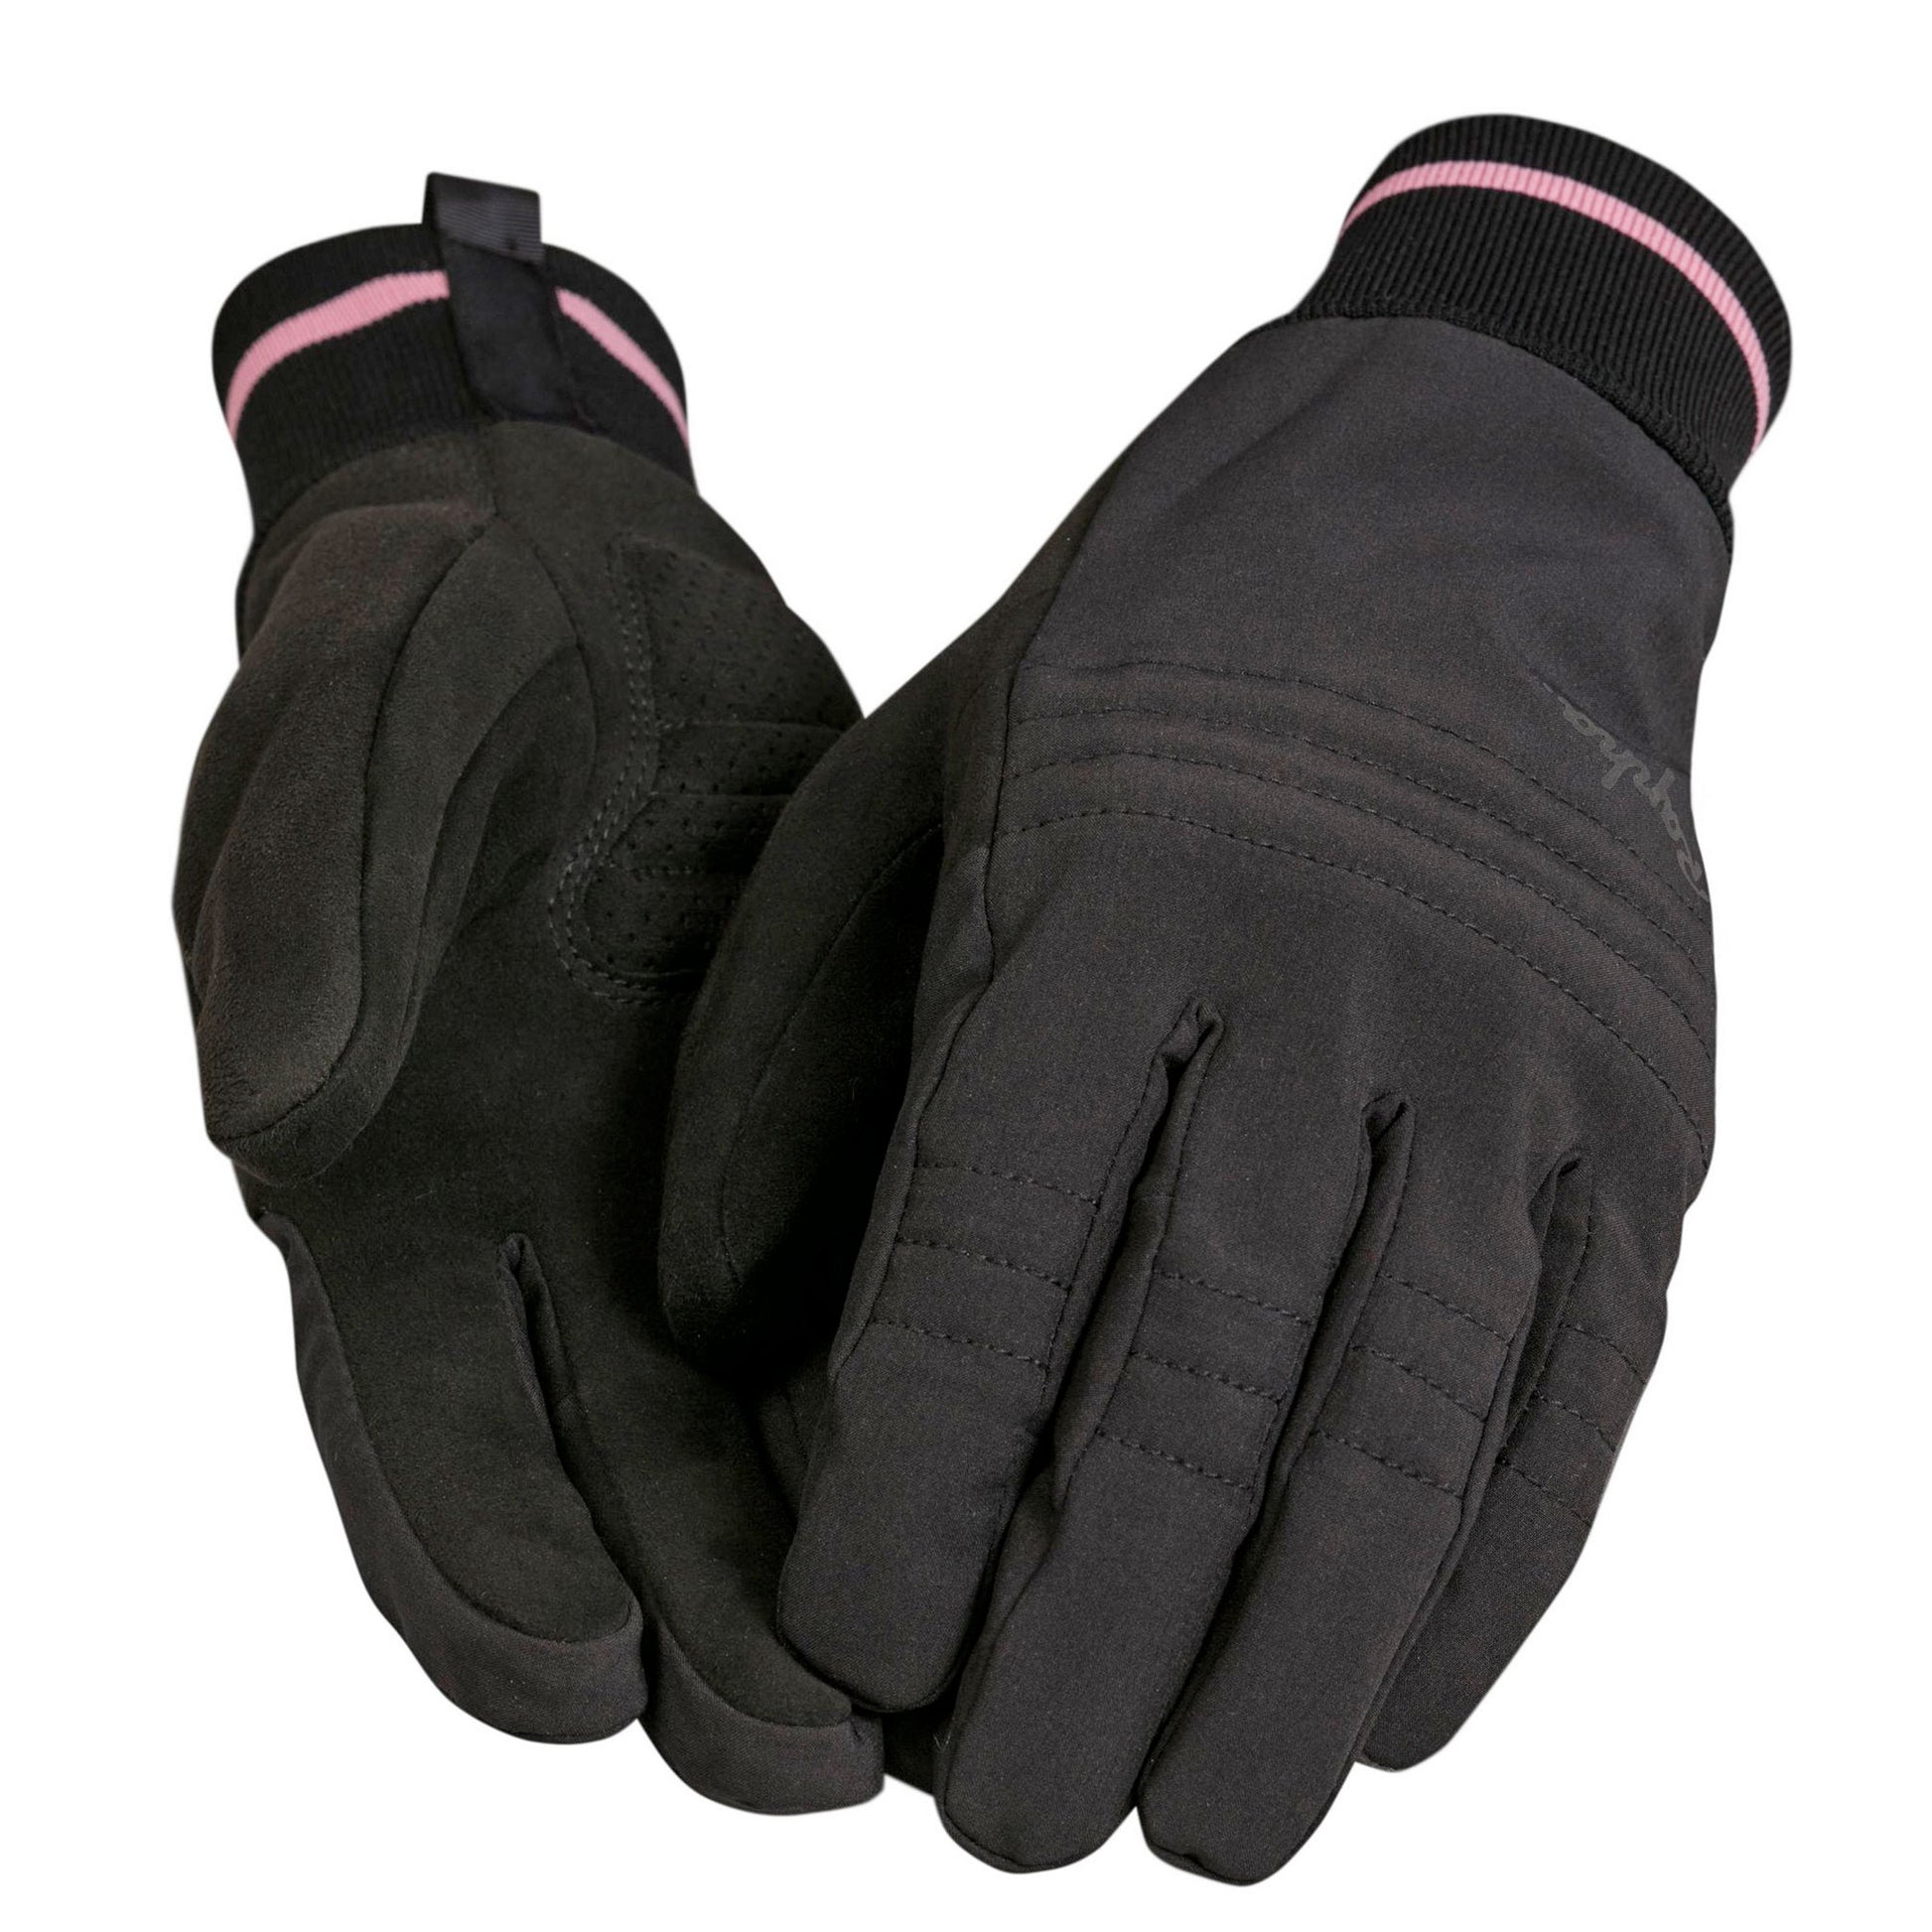 Rapha Winter Gloves Black buy online at Woolys Wheels bike shop Sydney with free delivery